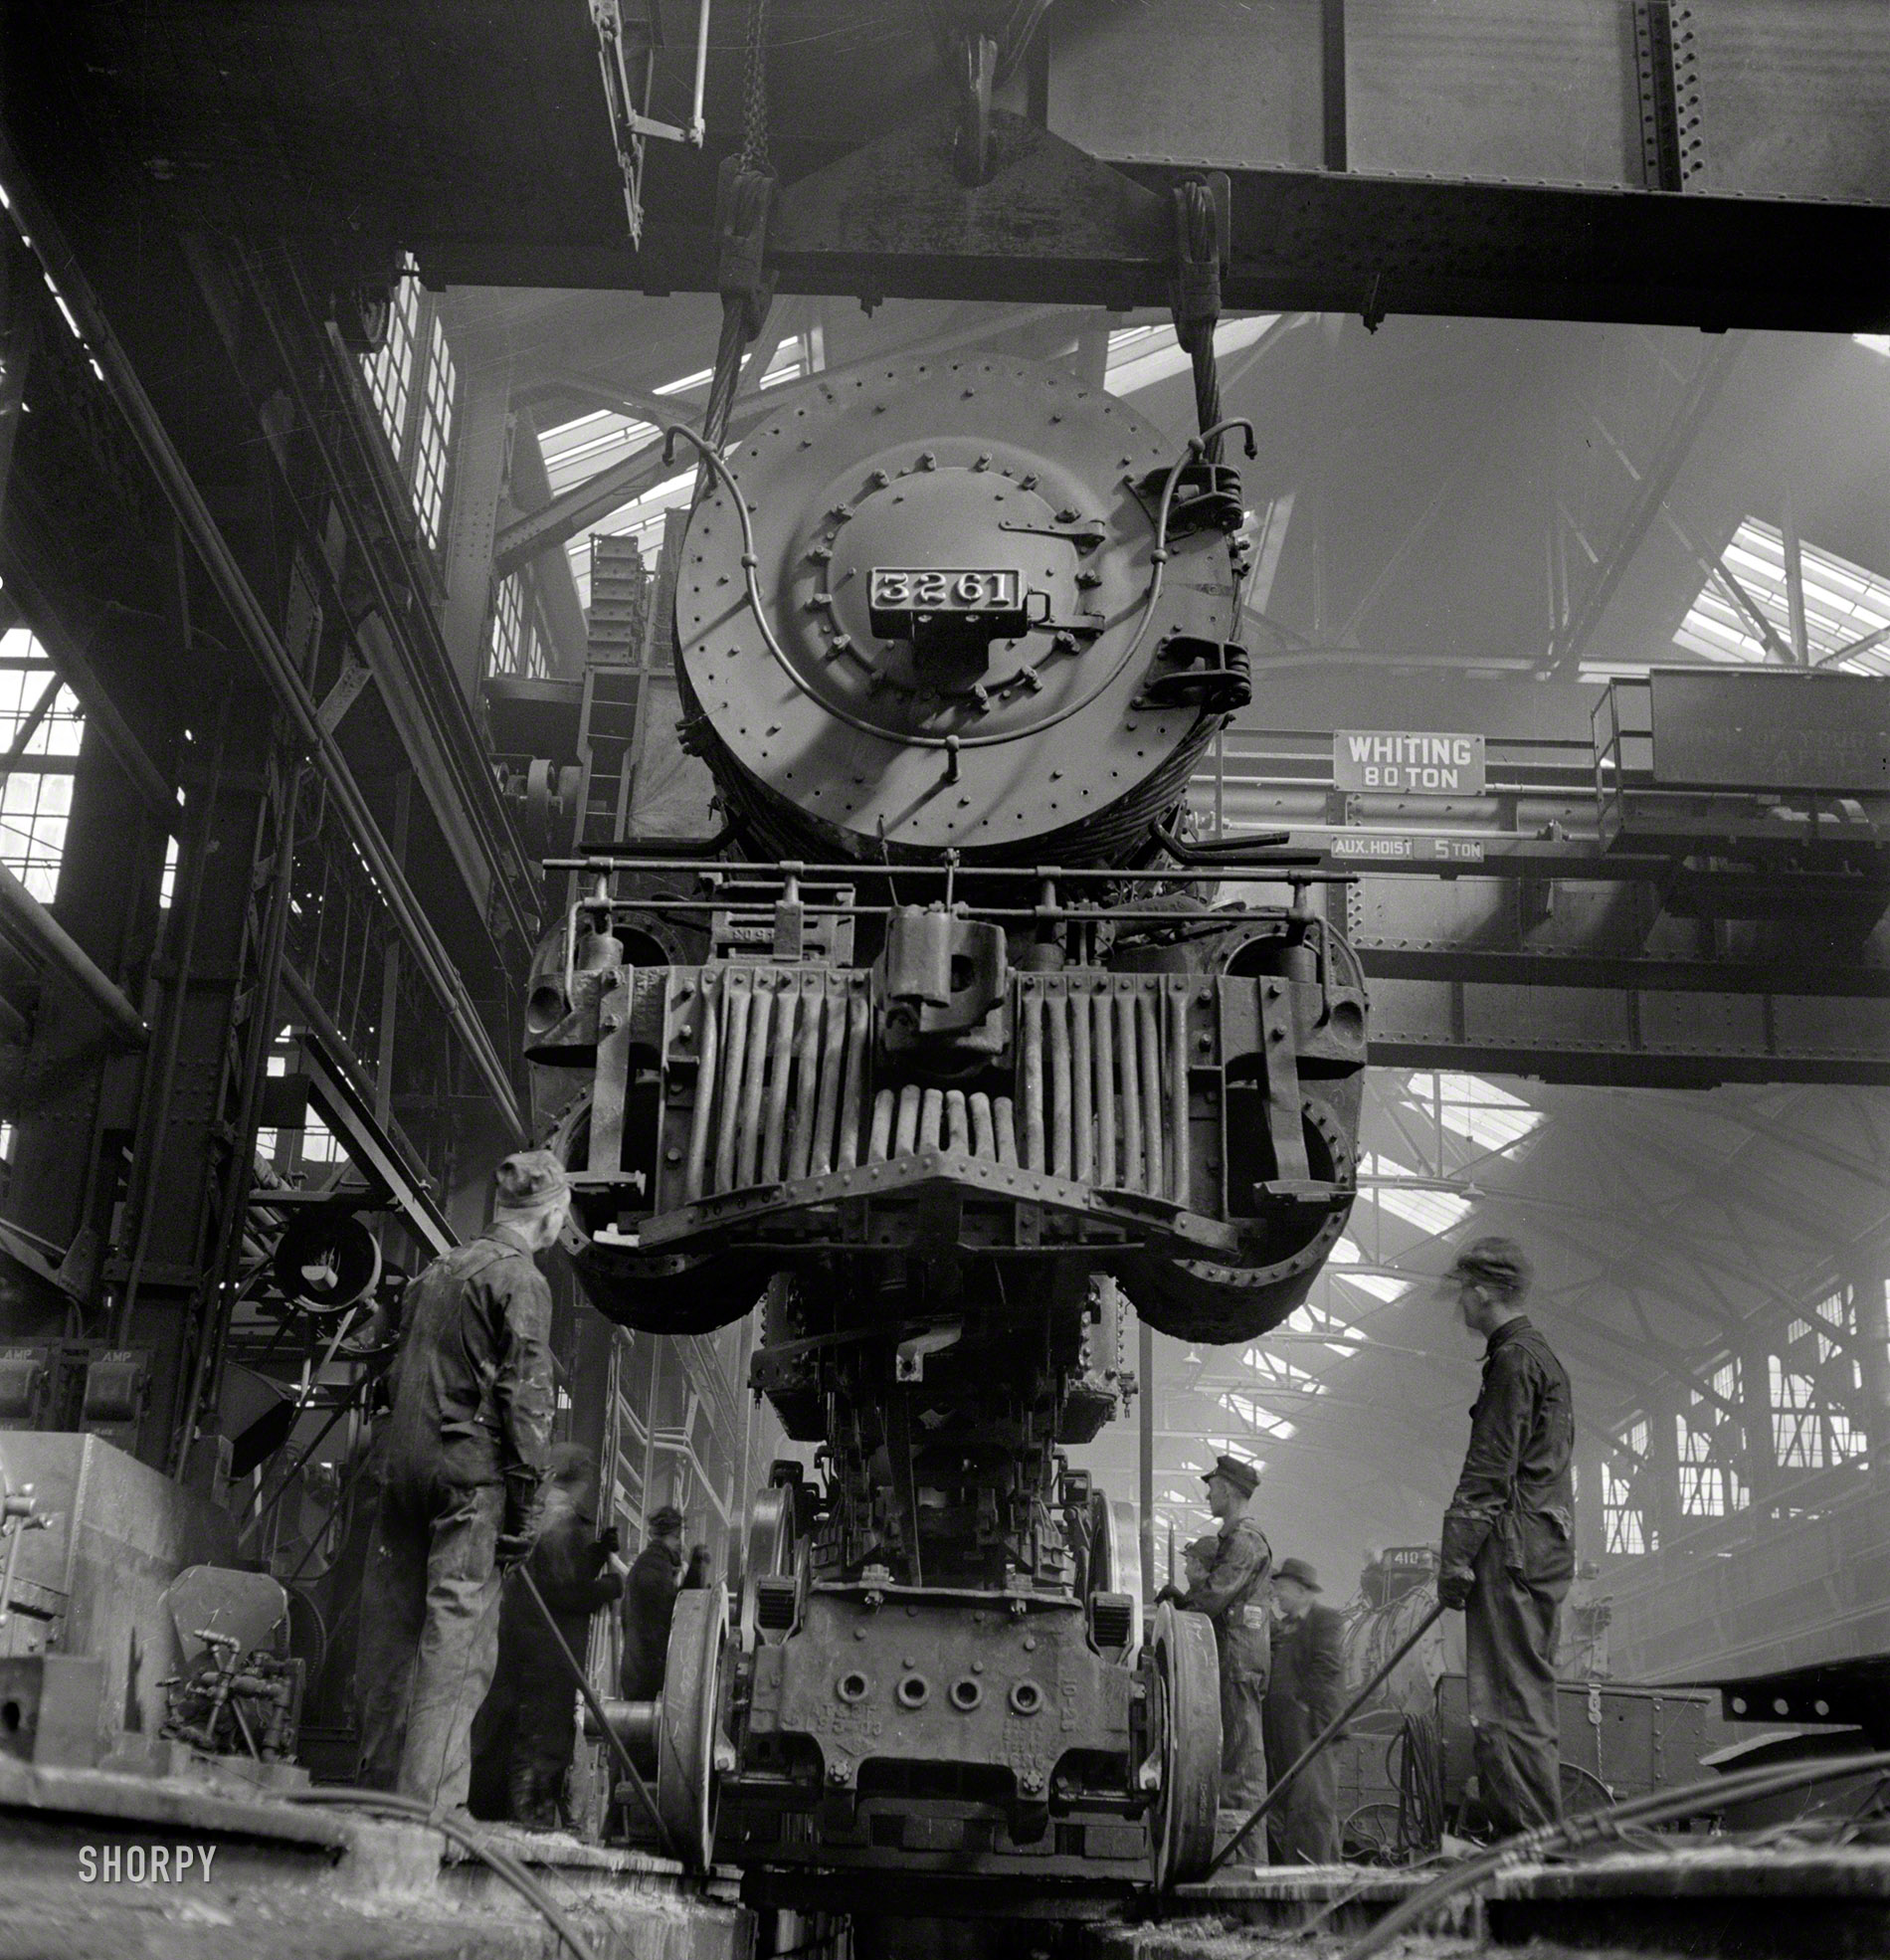 March 1943. "Topeka, Kansas. Wheeling an engine in the Atchison, Topeka & Santa Fe locomotive shops." Photo by Jack Delano. View full size.